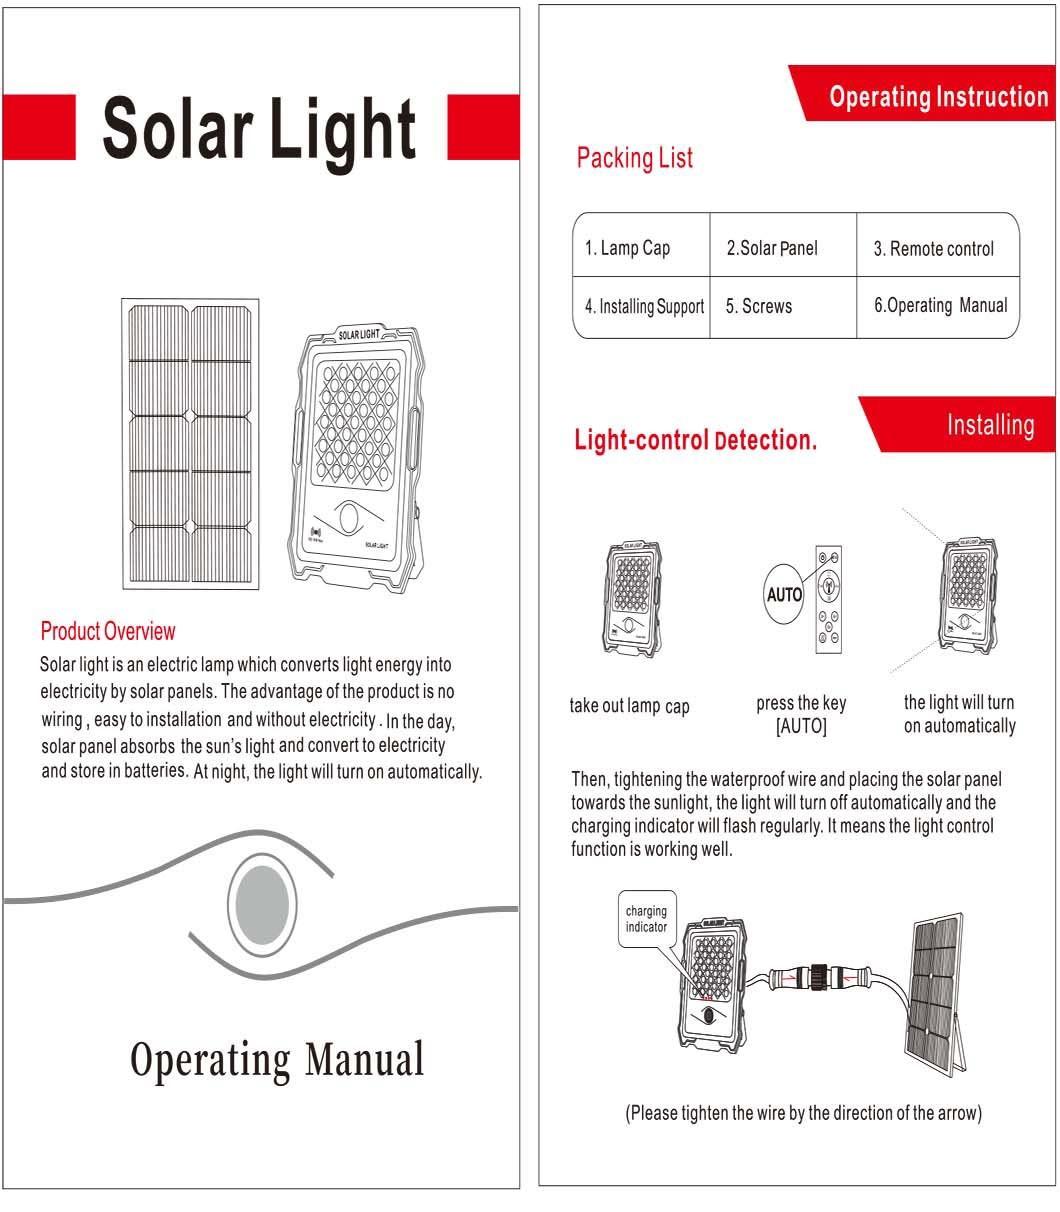 400W Solar Energy Saving LED Lighting IP67 Flood Lamp with CCTV